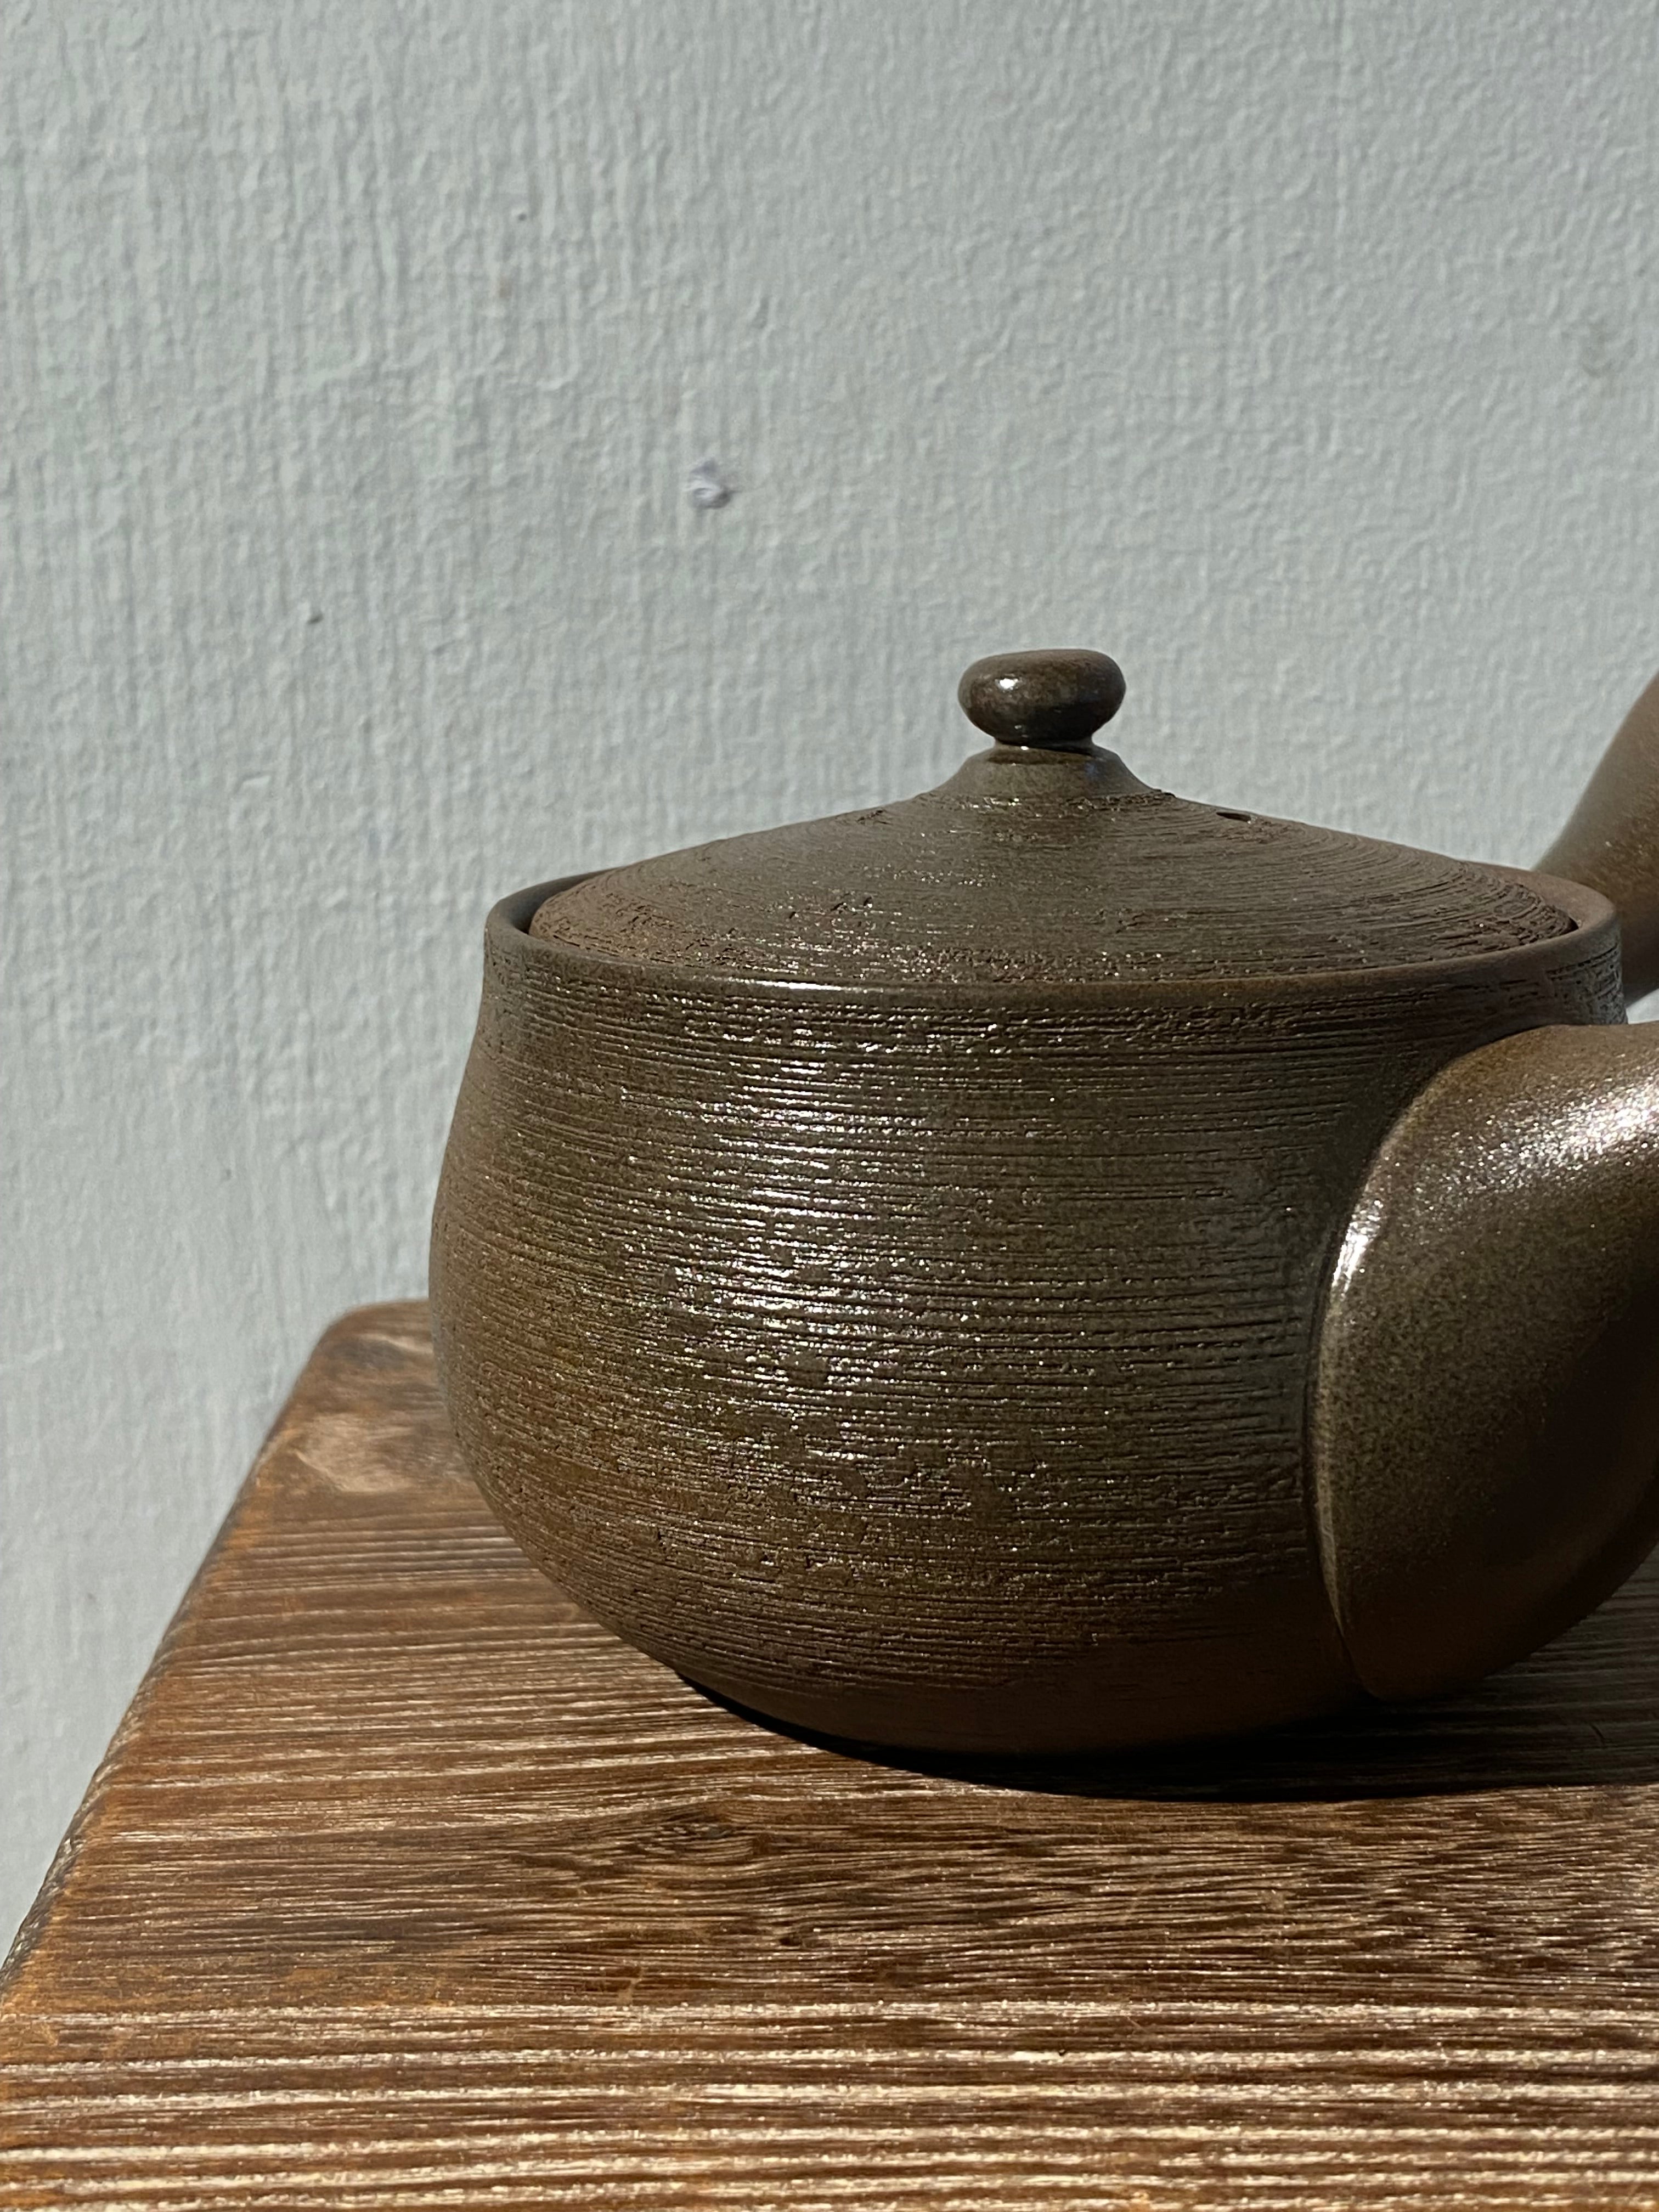 Rustic dark brown teapot with handle